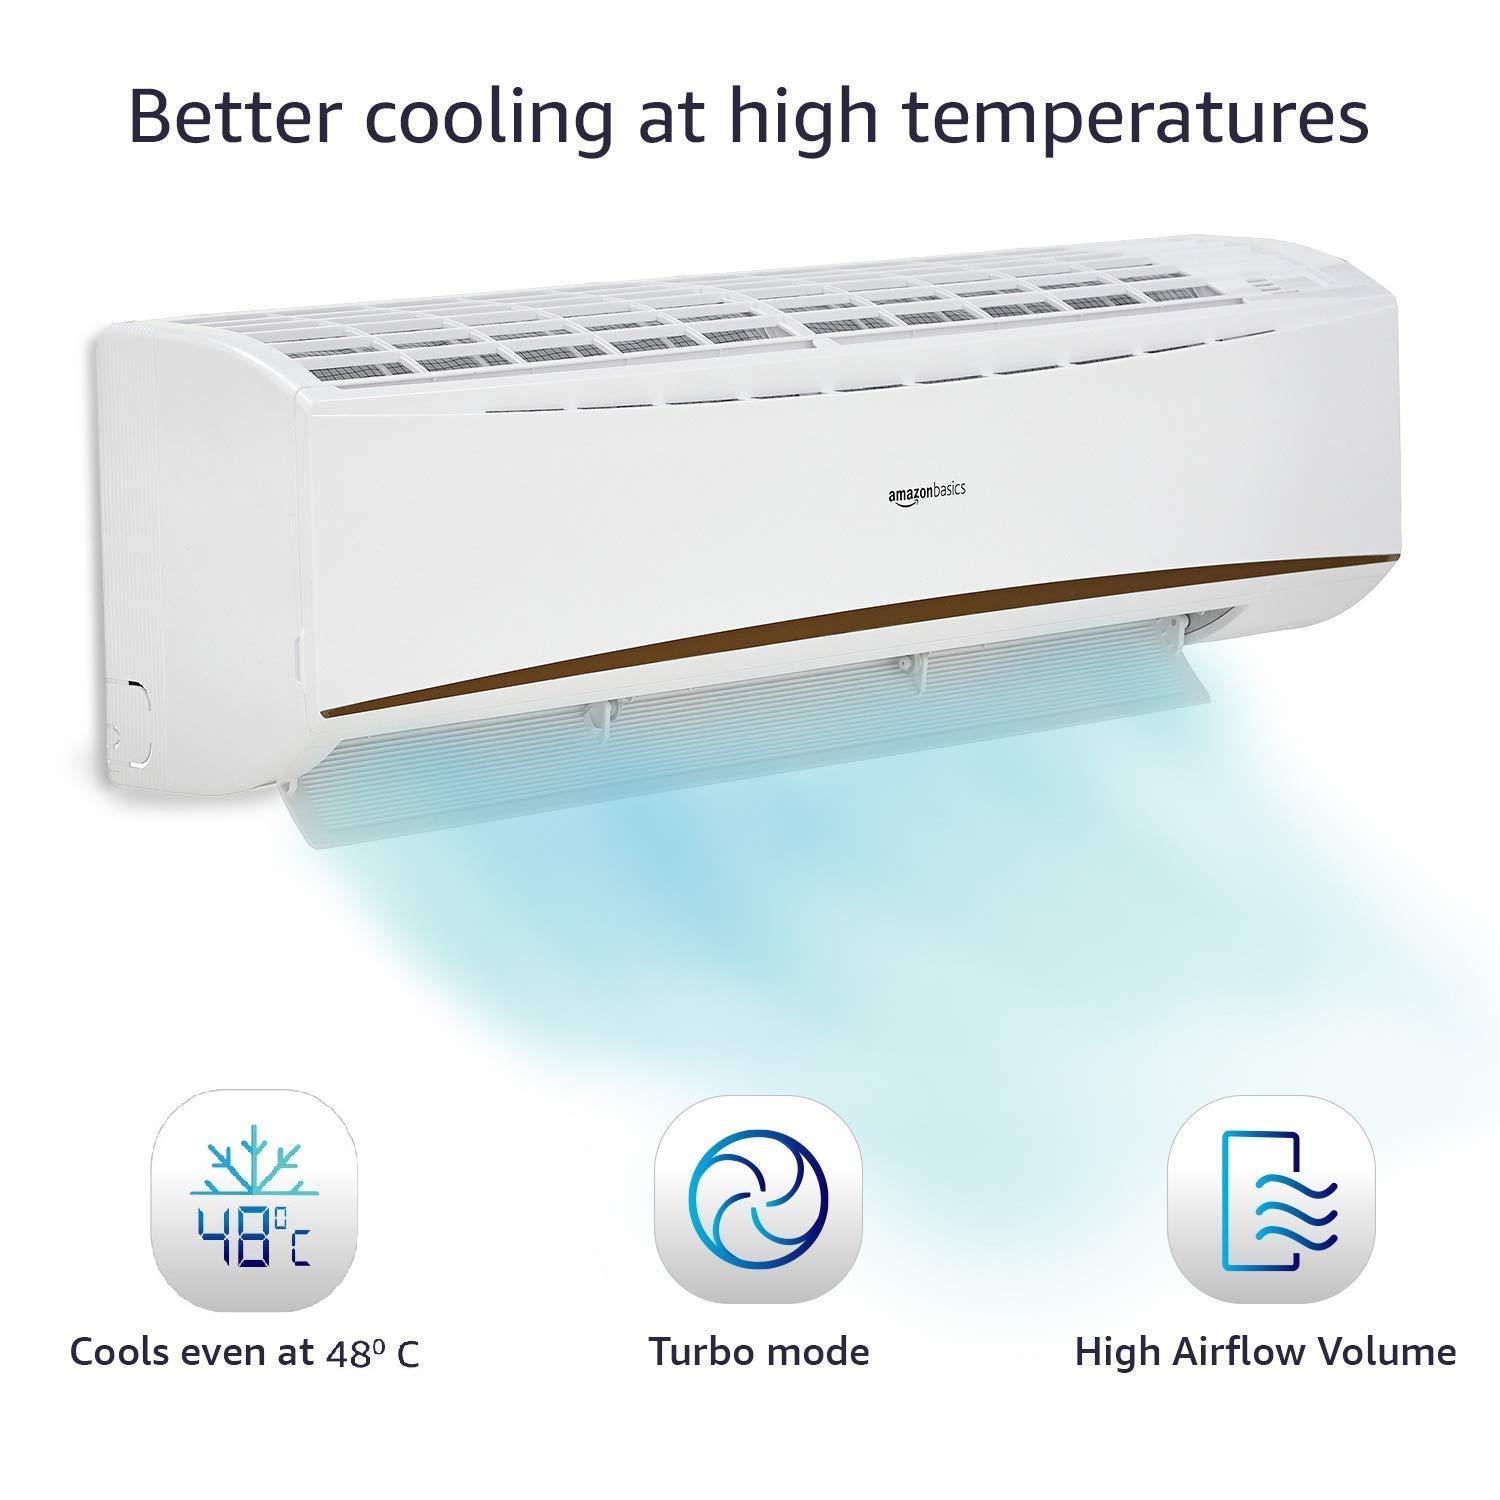 AROJL6HetTvgoYW oJsi5XH1l Best 3 Star air conditioners in India